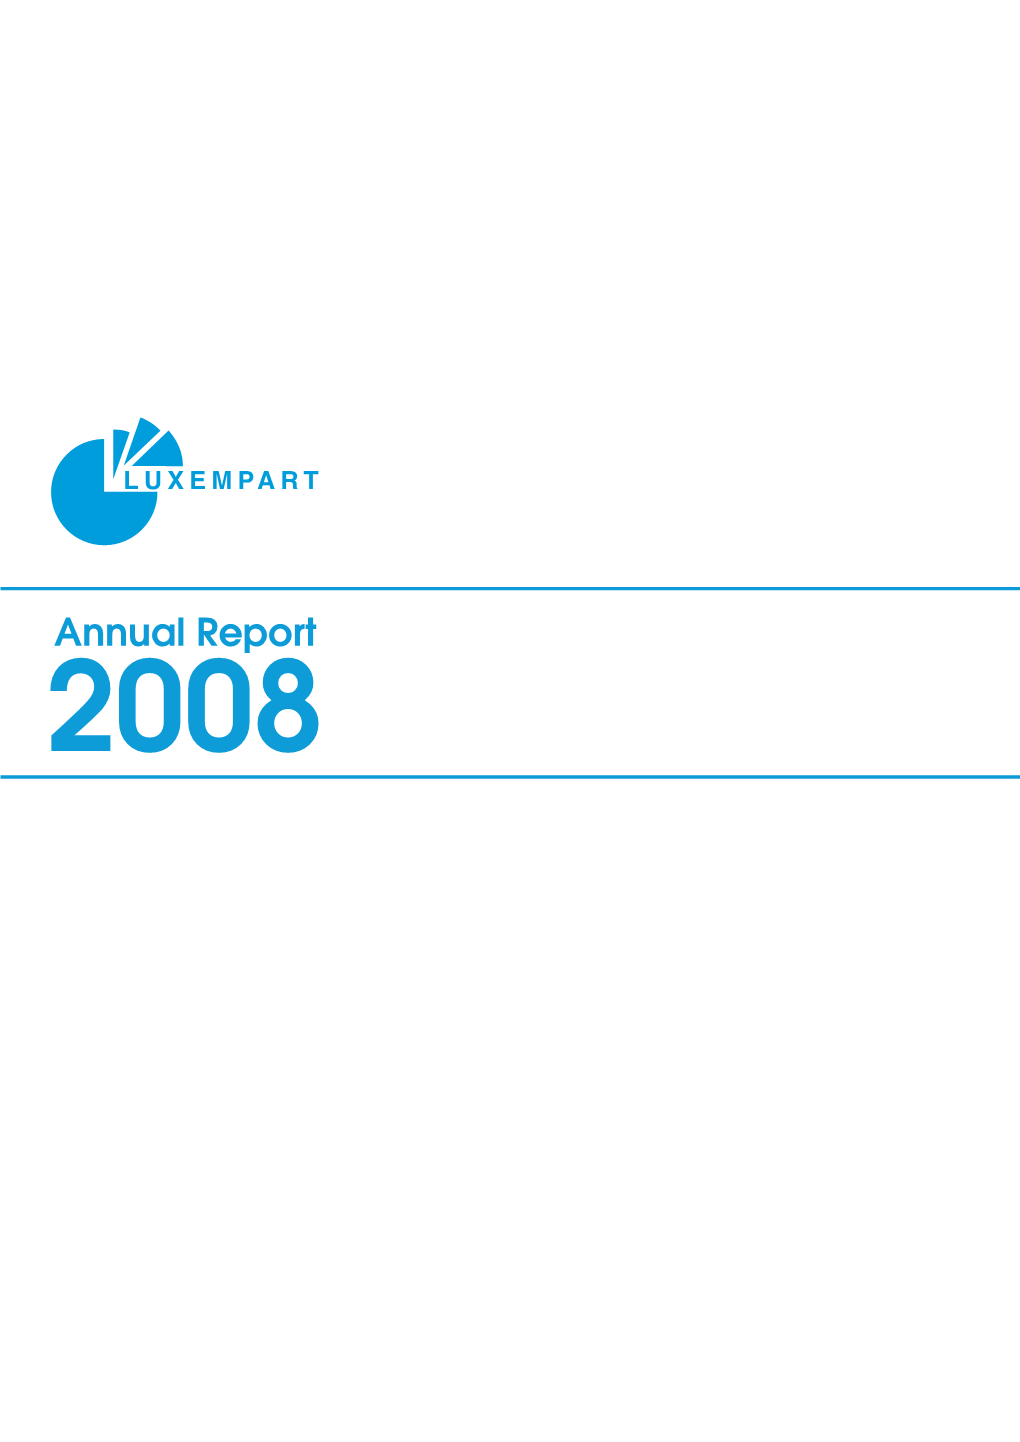 Annual Report 2008 Worldreginfo - 9D07ae6d-07Ec-4D7f-A80a-D2881640dc1a Worldreginfo - 9D07ae6d-07Ec-4D7f-A80a-D2881640dc1a Summary